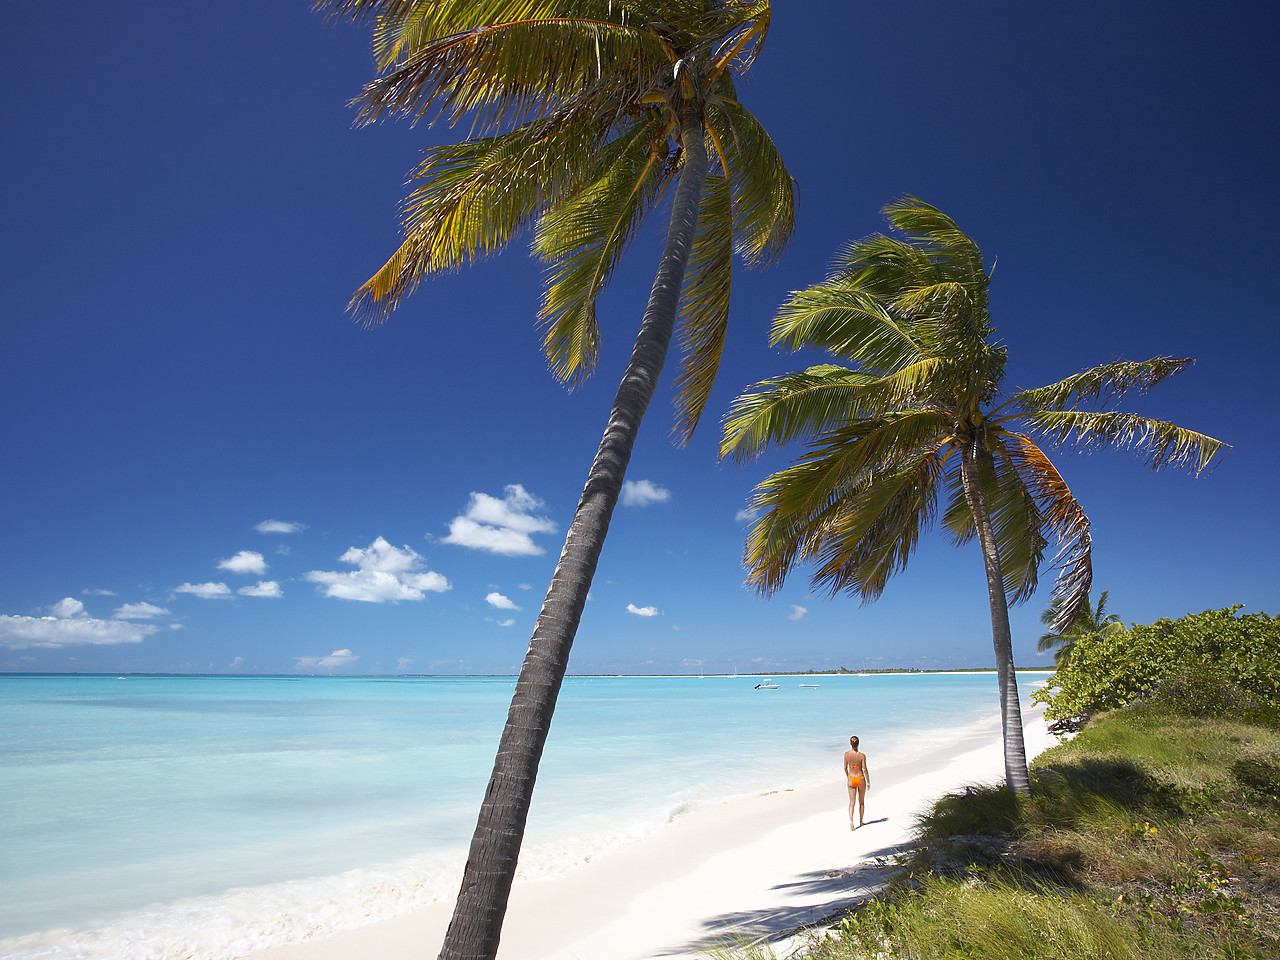 #070025-4 - Lone Woman Walking on Beach, Coco Point, Barbuda, Caribbean, West Indies